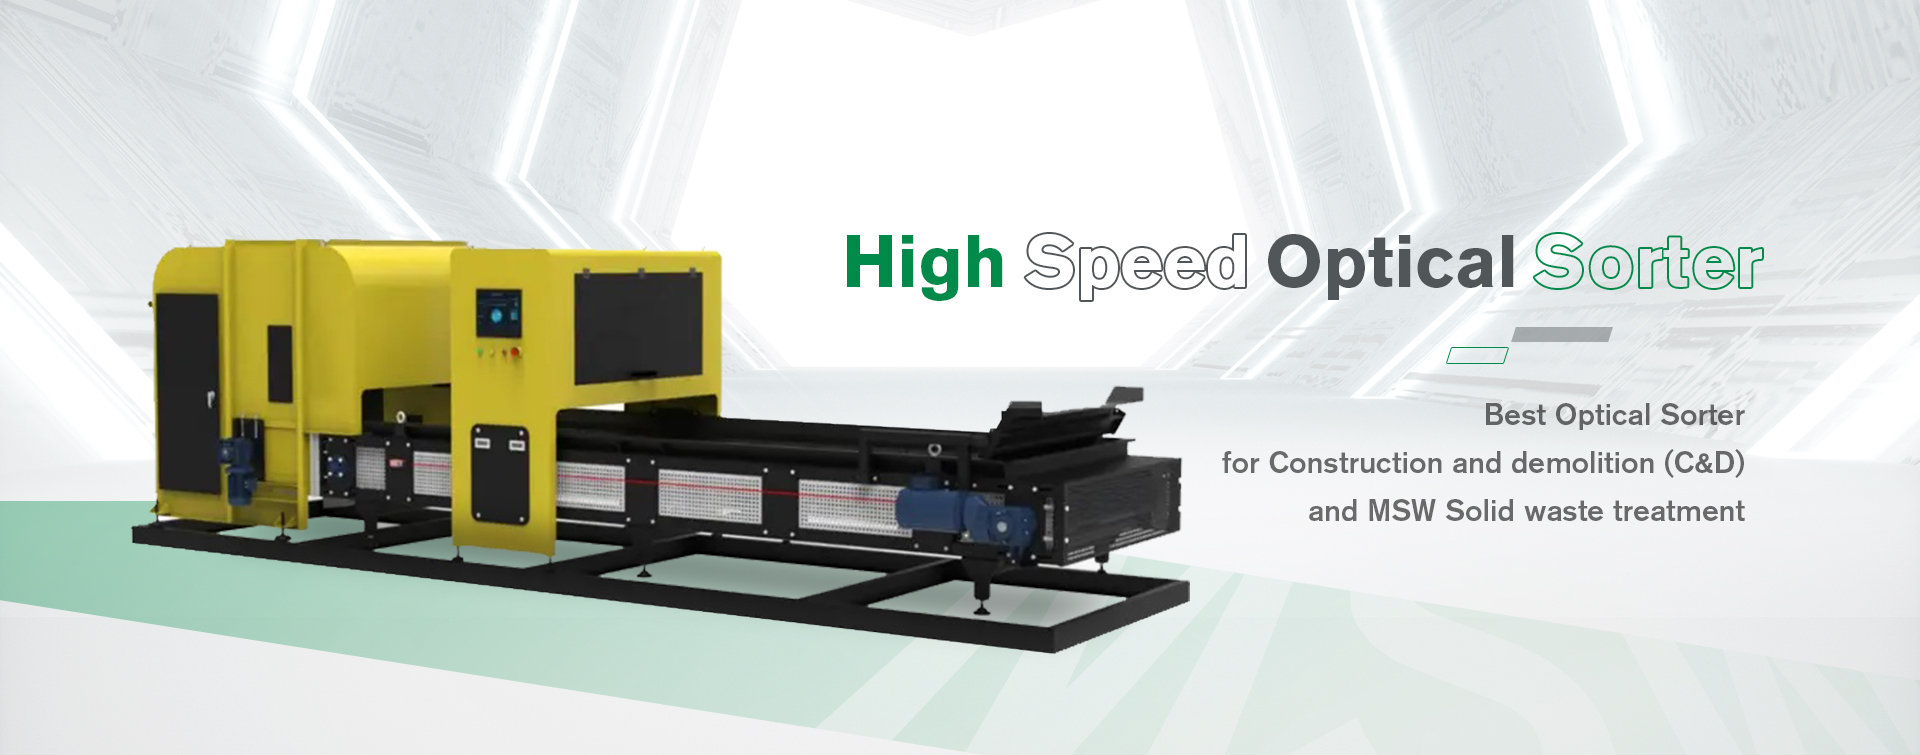 High Speed Optical Sorter